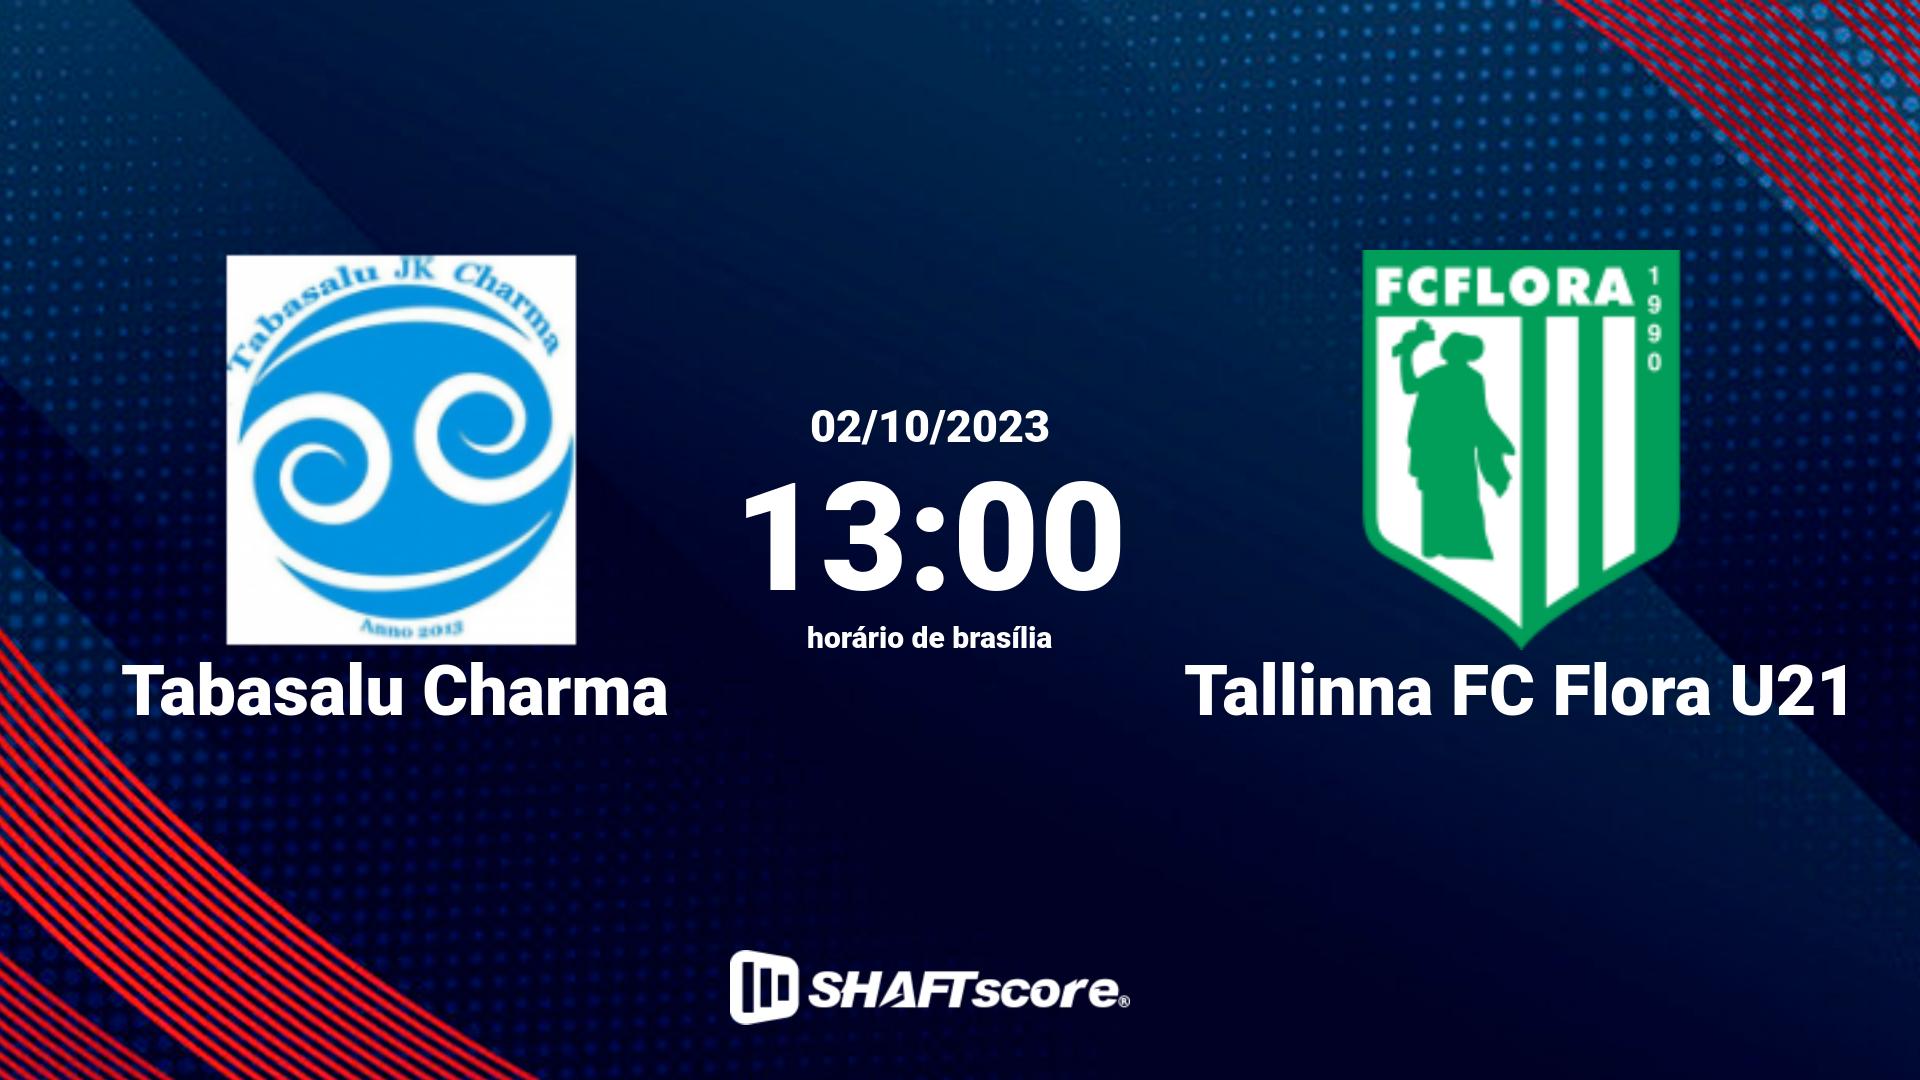 Estatísticas do jogo Tabasalu Charma vs Tallinna FC Flora U21 02.10 13:00